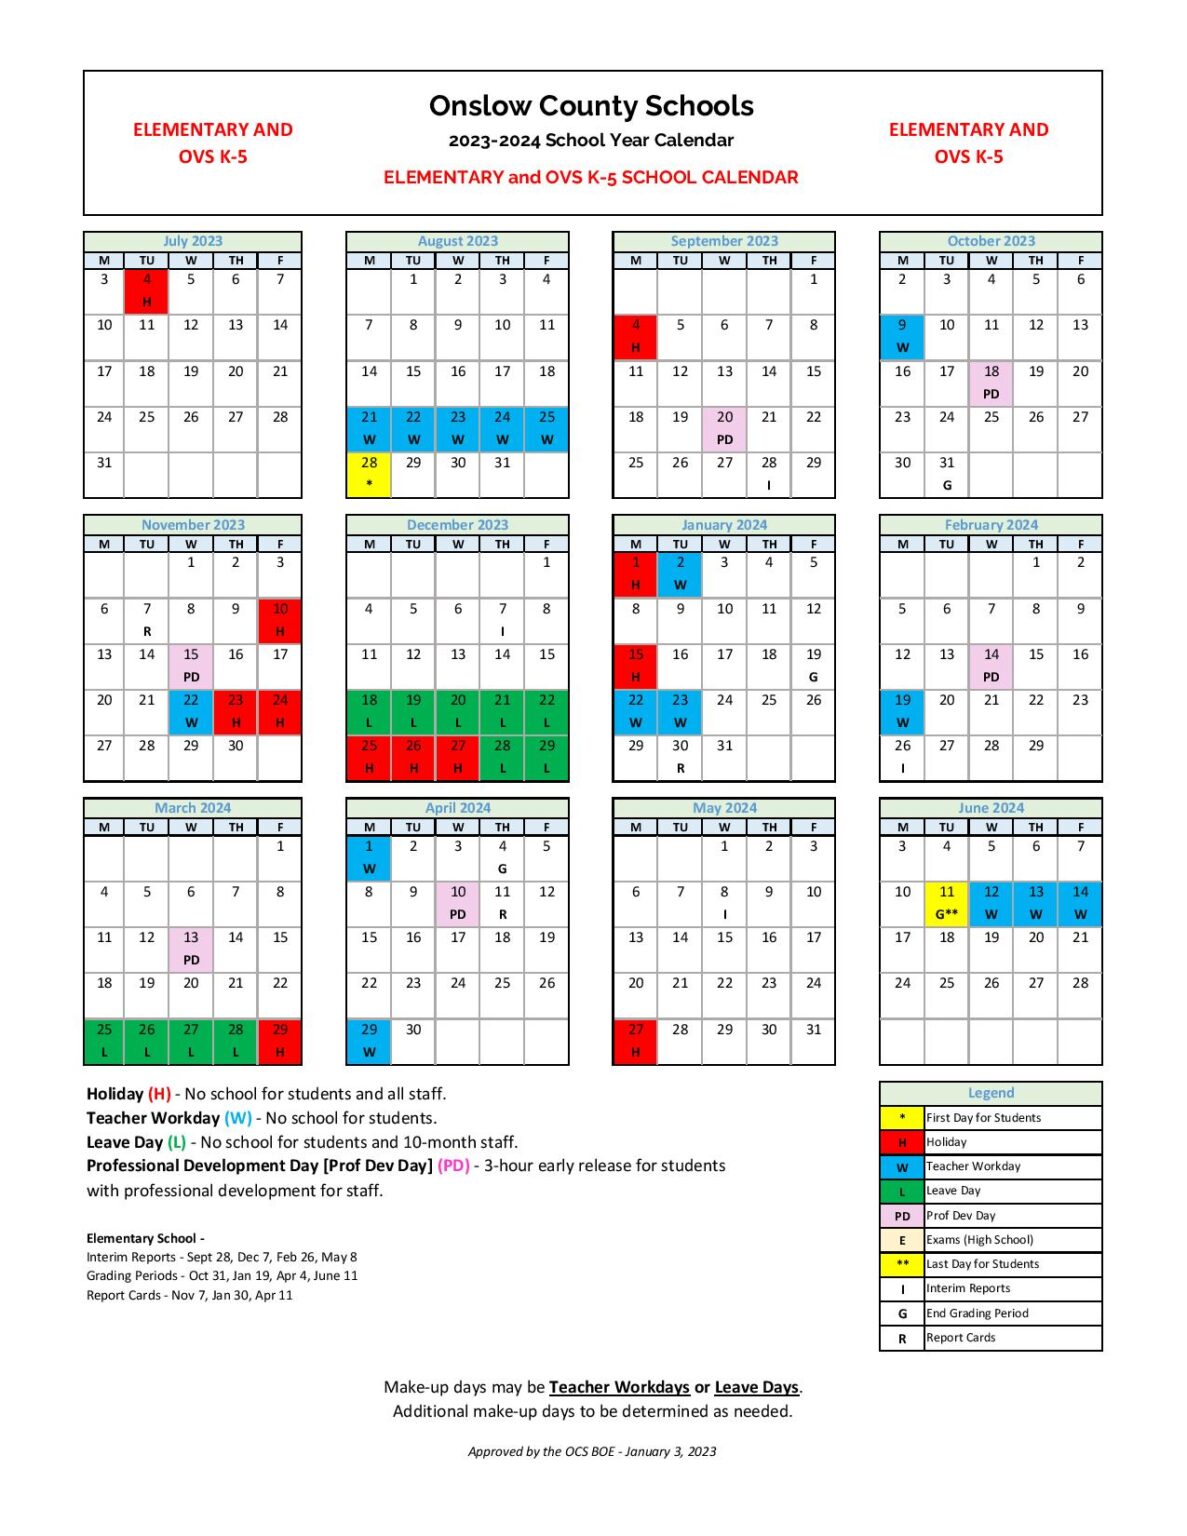 Onslow County Schools Calendar 2023 2024 Holidays